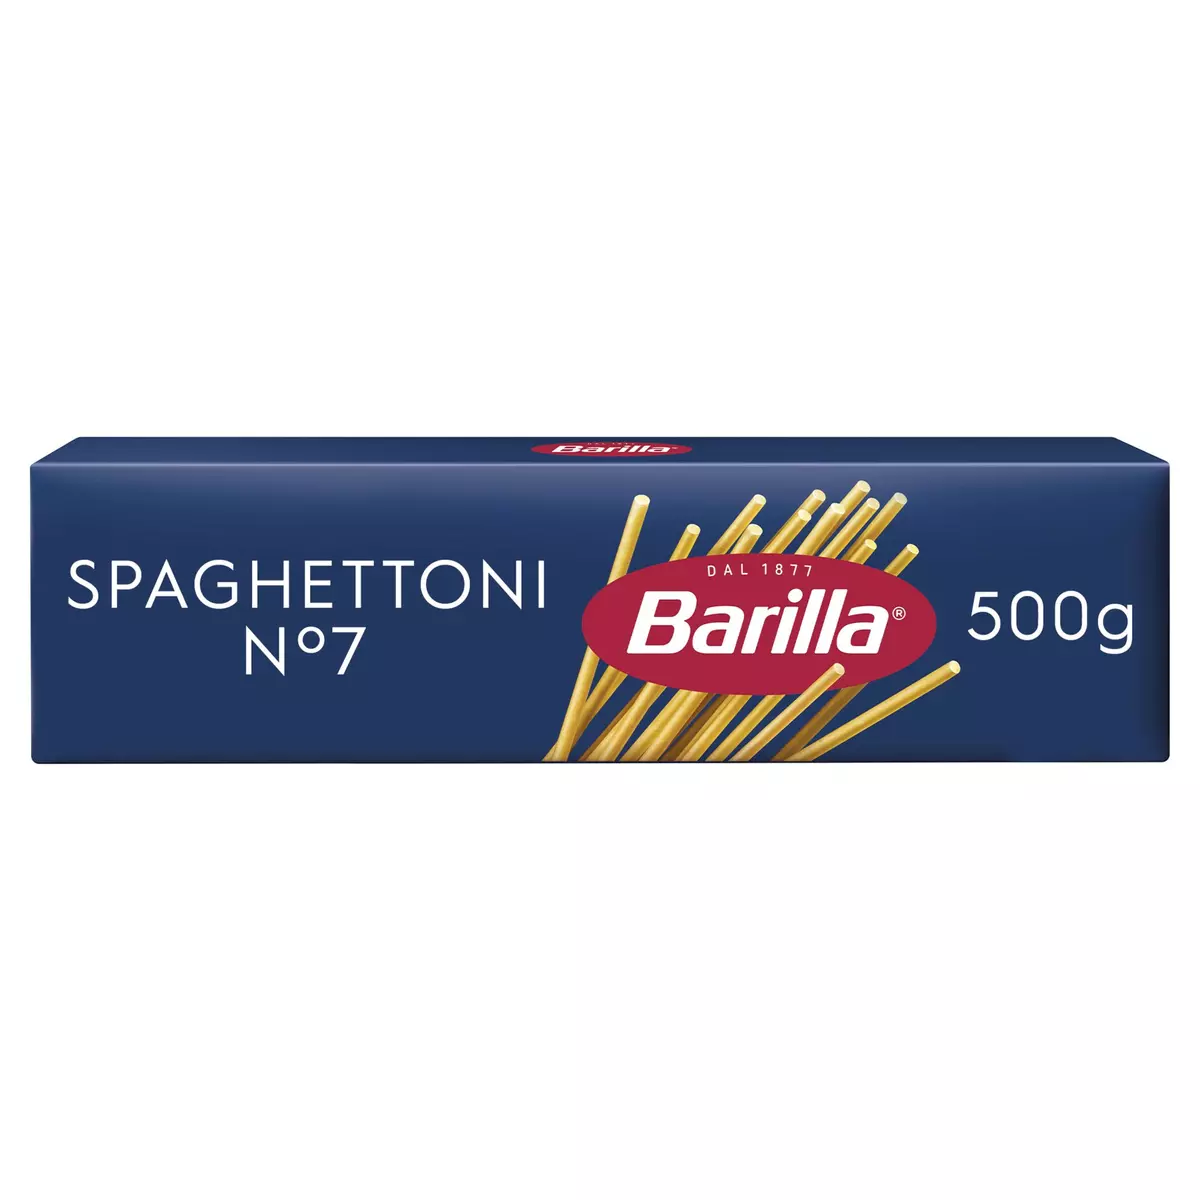 BARILLA Spaghettoni n°7 500g